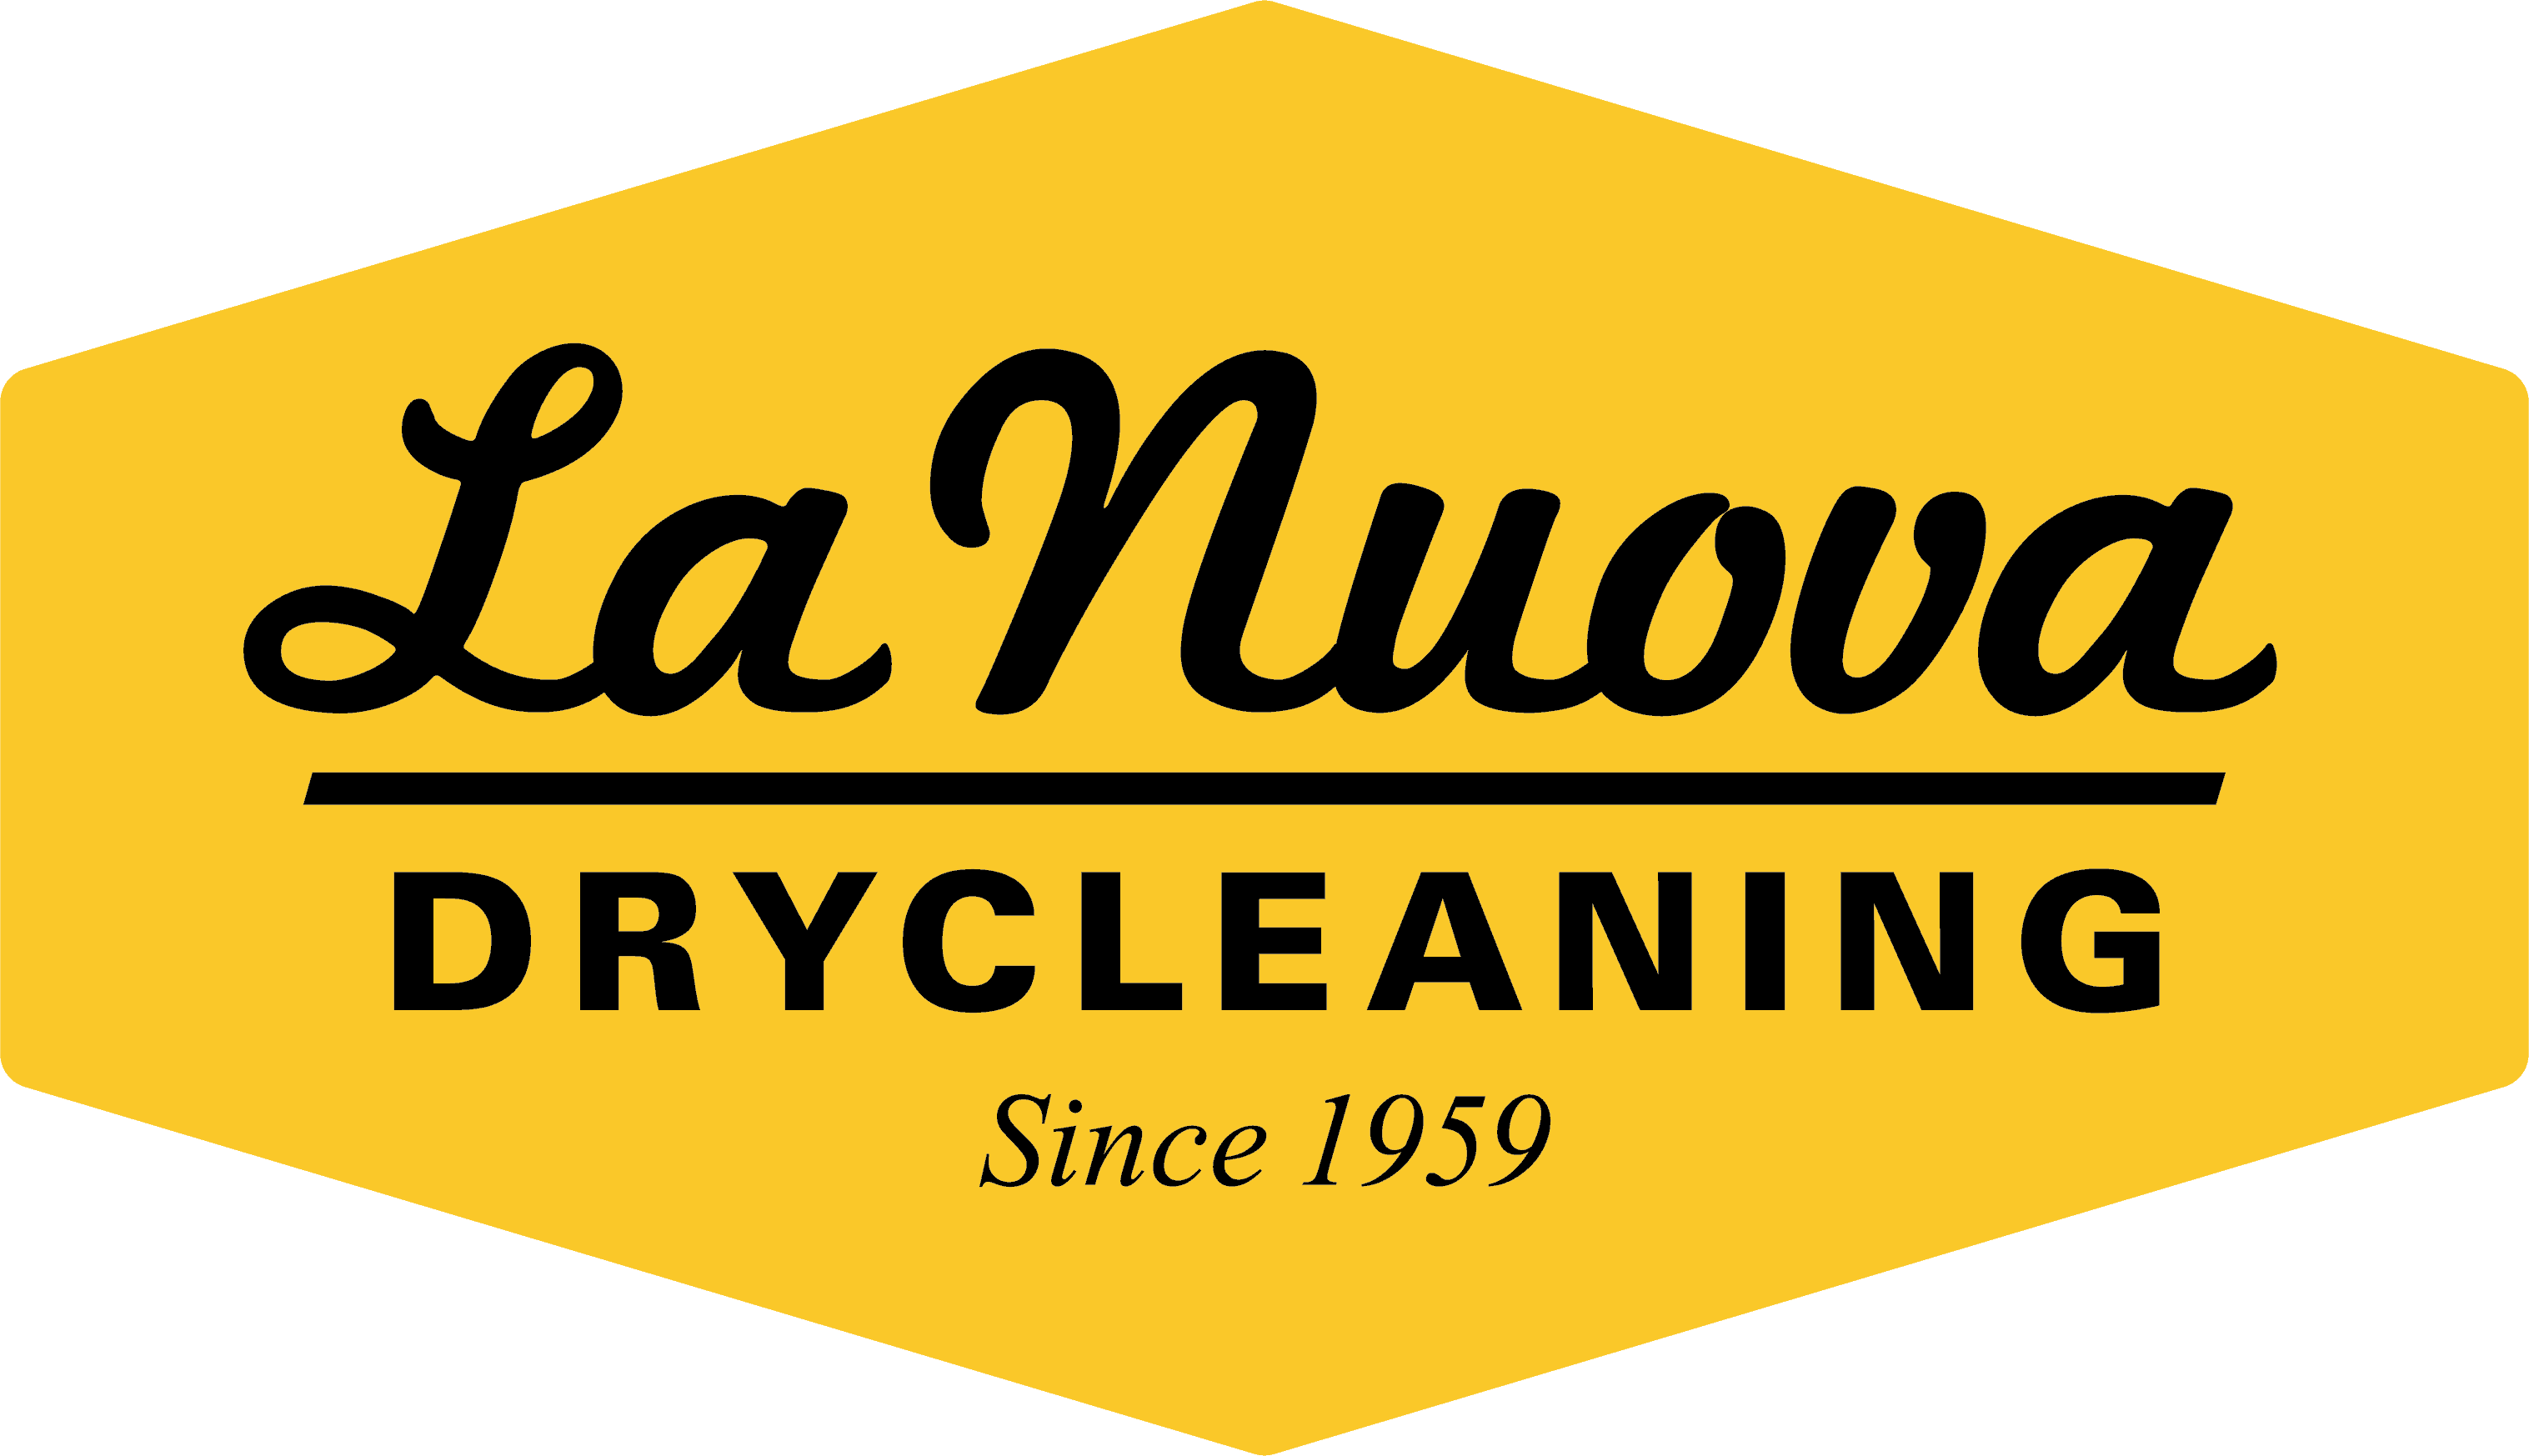 La Nuova Drycleaning logo - yellow